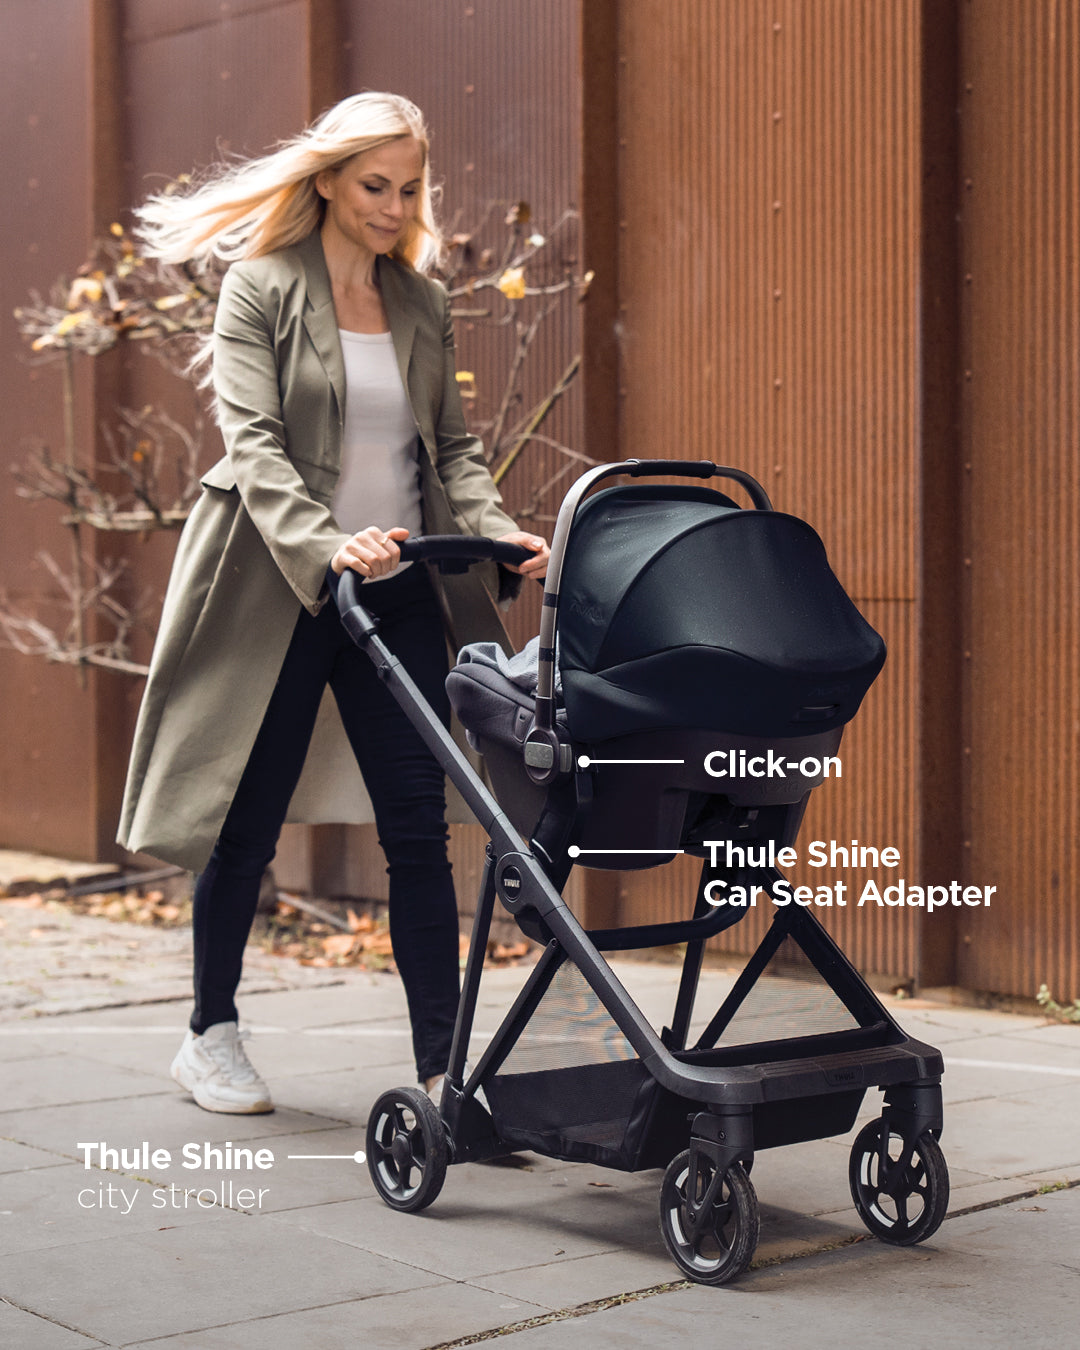 Thule Shine infant car seat configuration